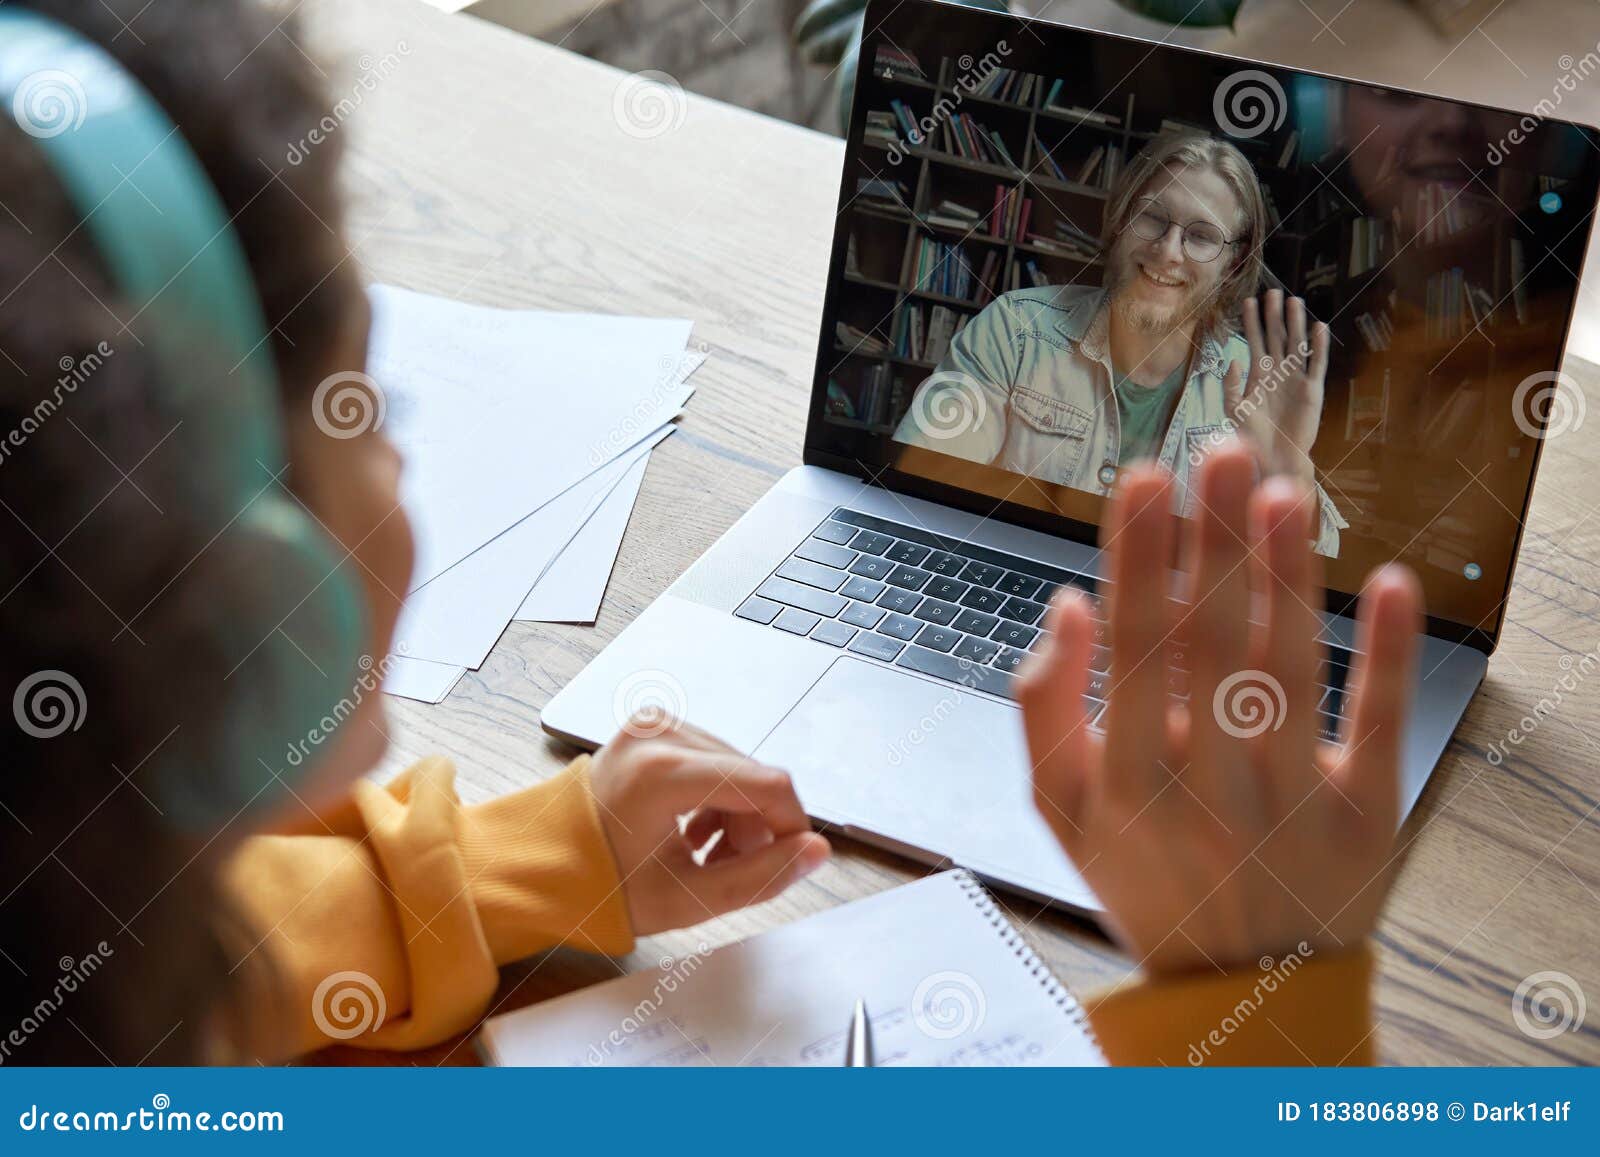 hispanic teen girl distance learning with online teacher on laptop screen.